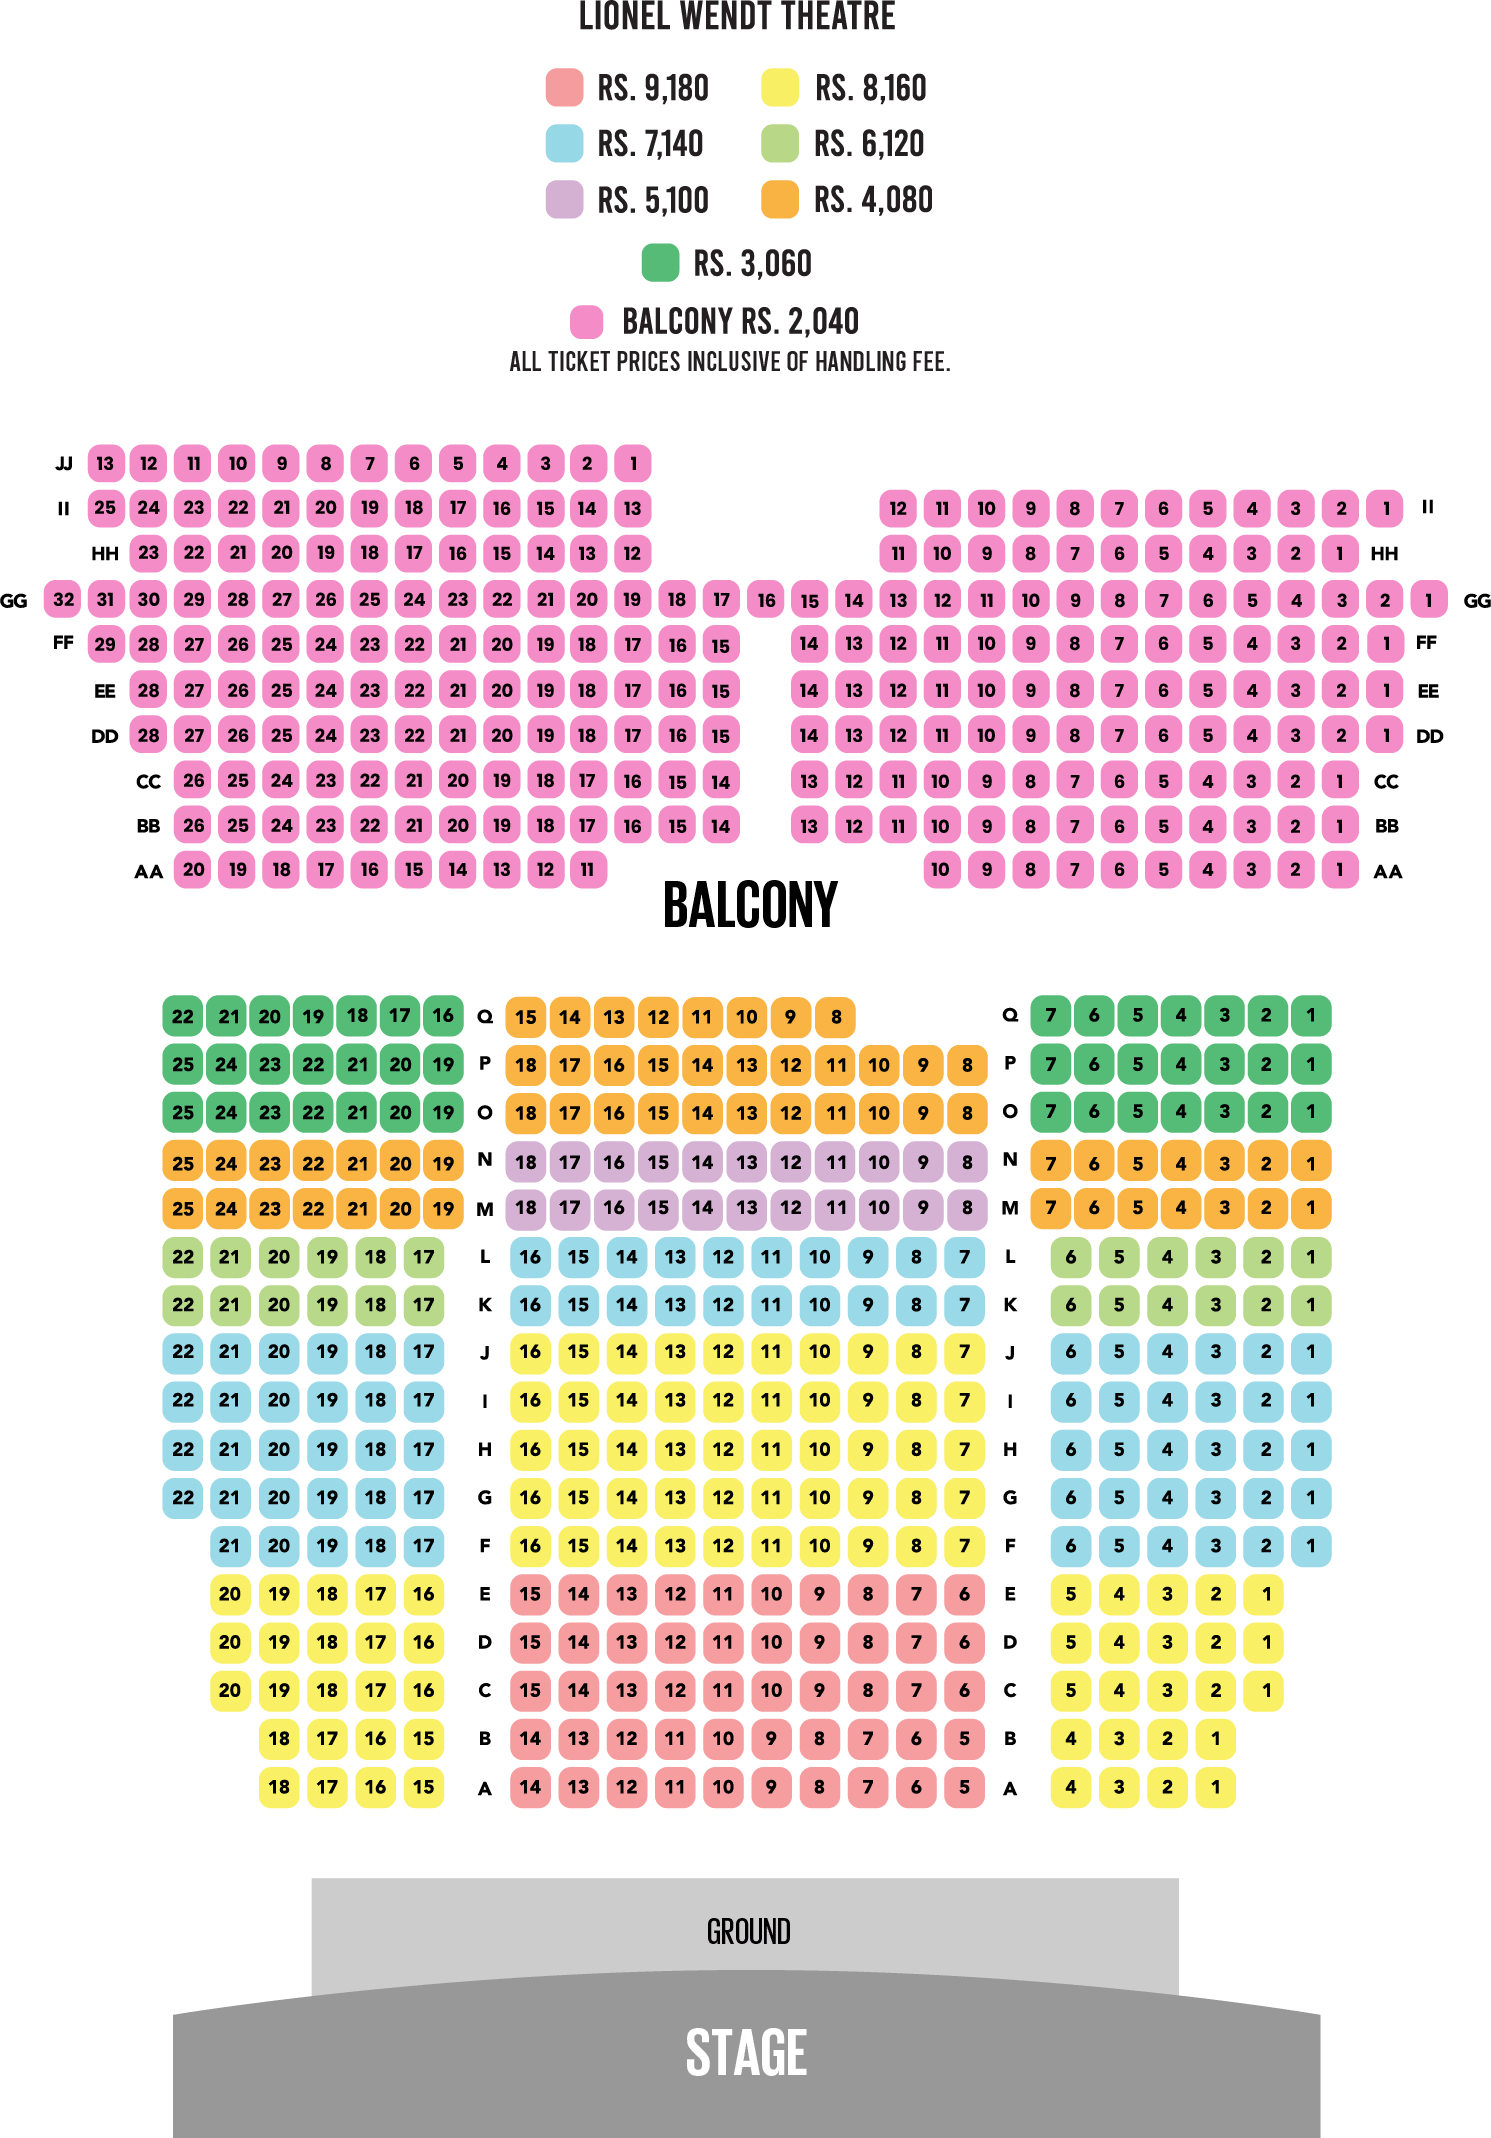 Seating Plan - Lionel Wendt Theatre